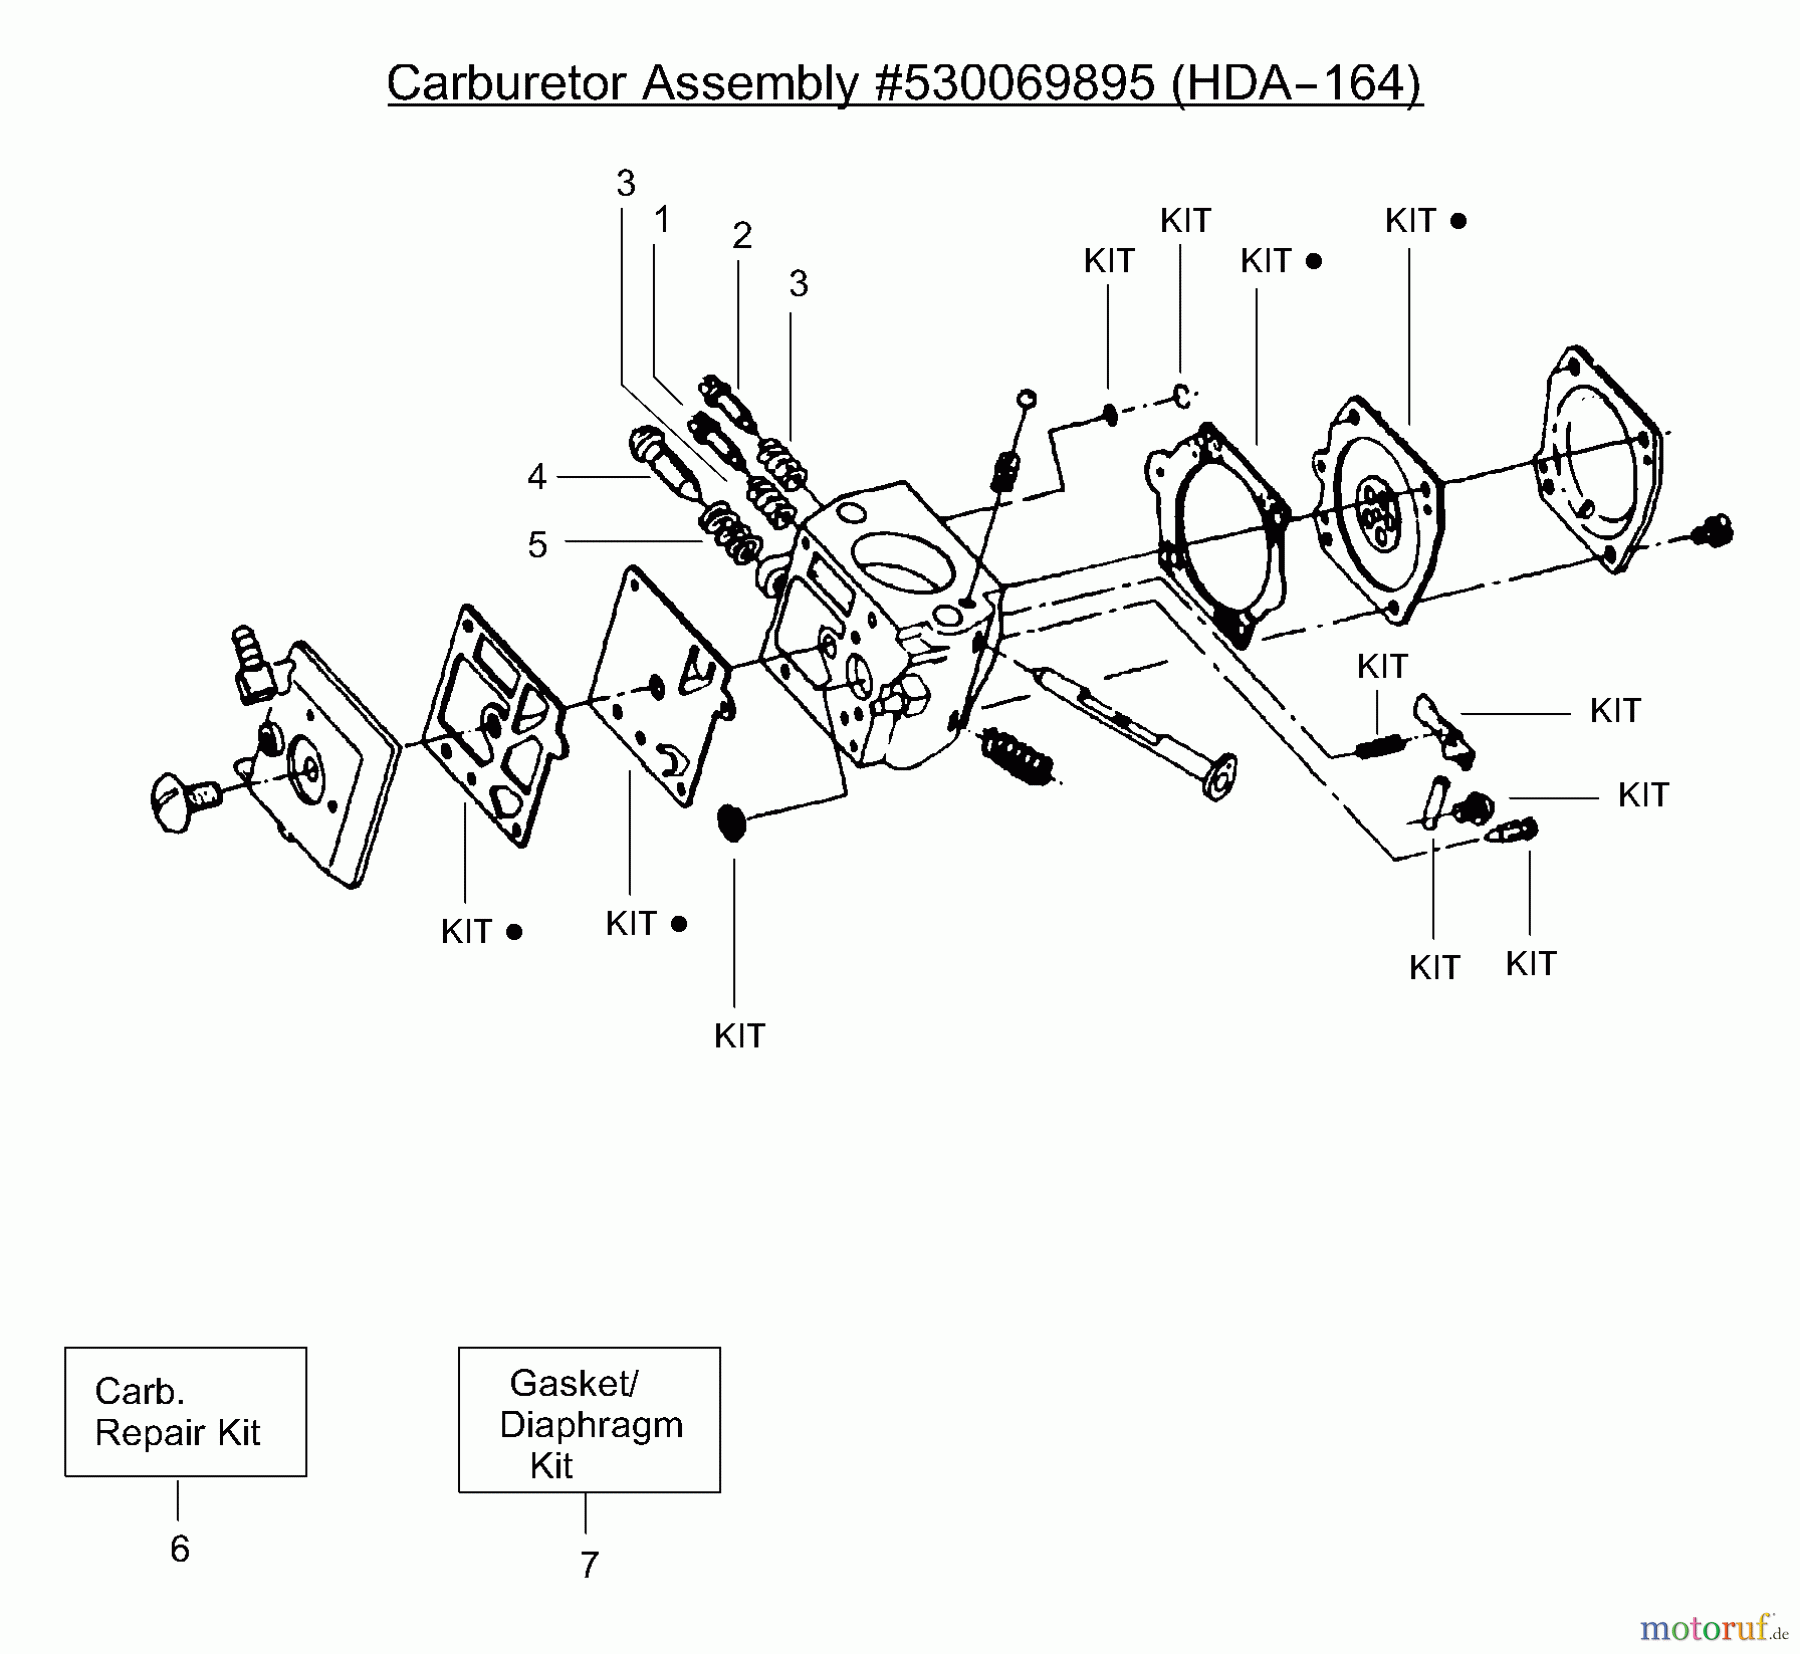  Poulan / Weed Eater Motorsägen 3450 (p219) - Poulan Chainsaw Carburetor Assembly (HDA164) 530069895